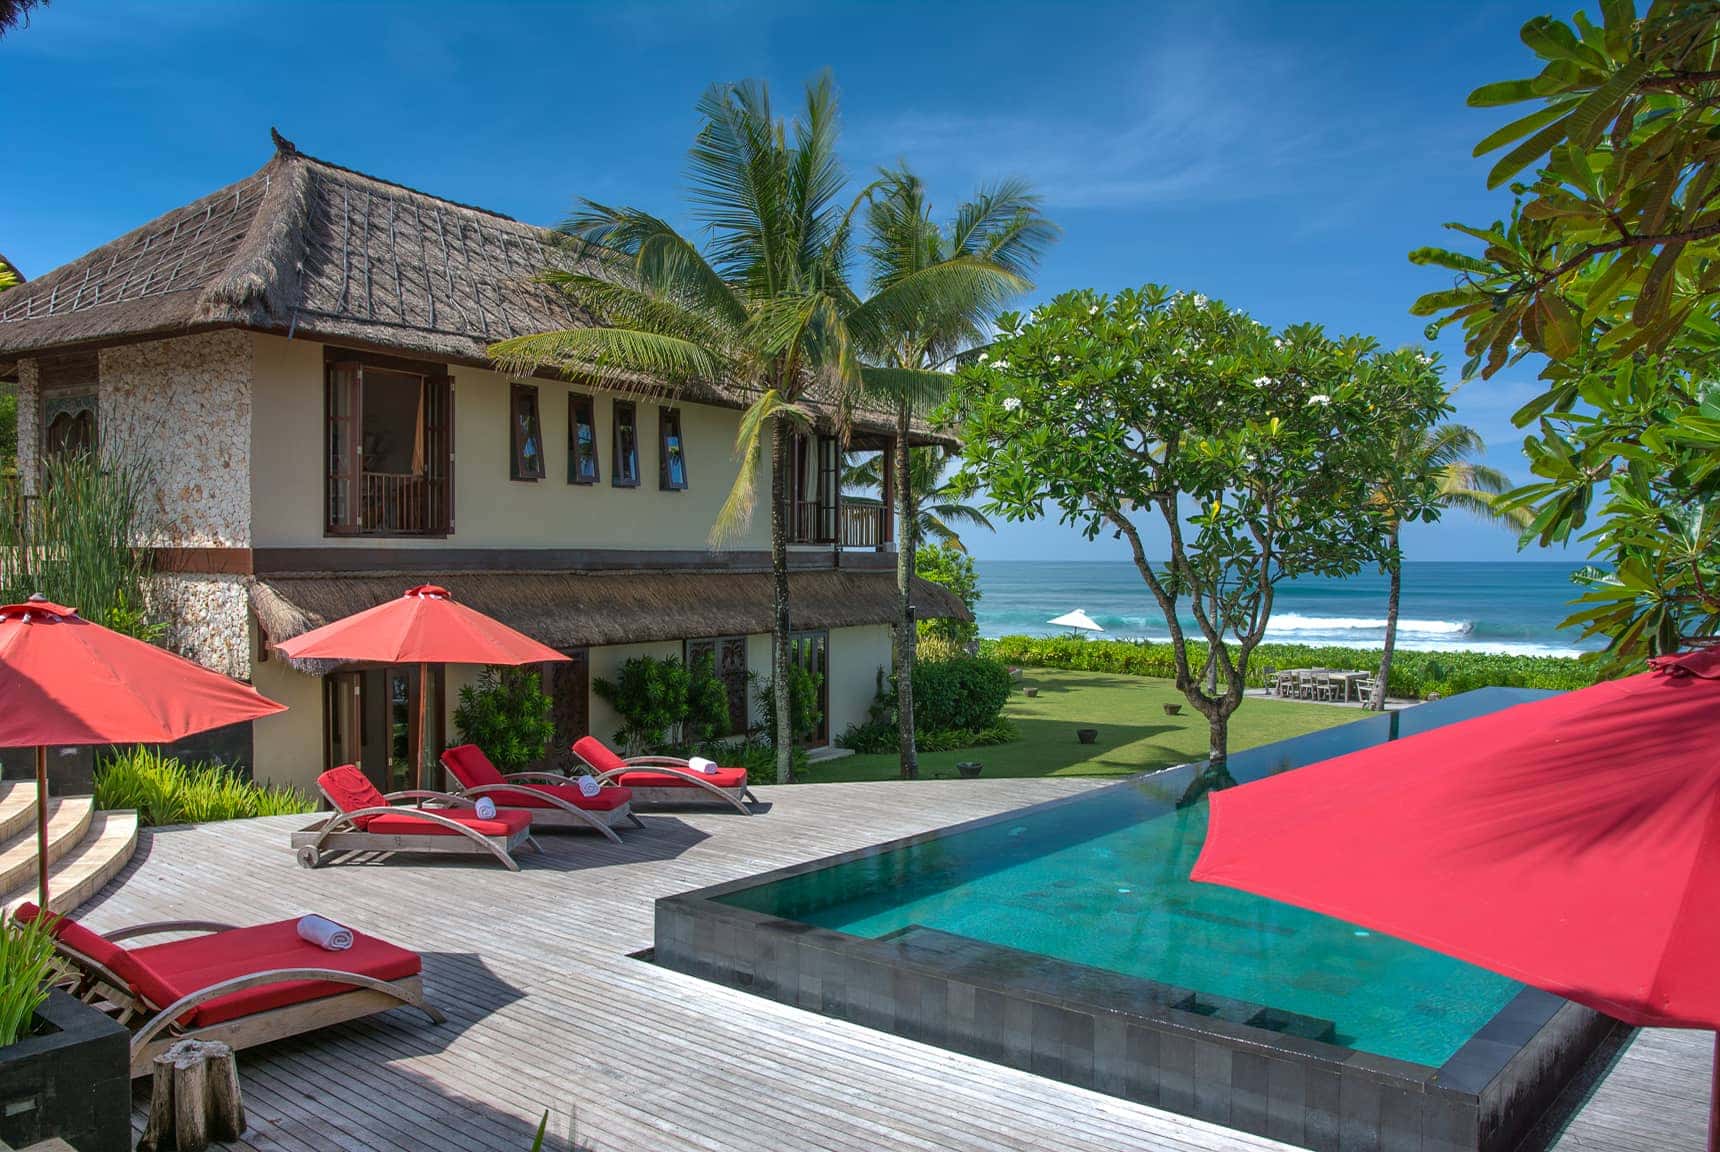 Villa Sound of the Sea - Echo Beach, Bali Indonesia (Bali villa photography by master photographer Rick Carmichael of LuxViz)